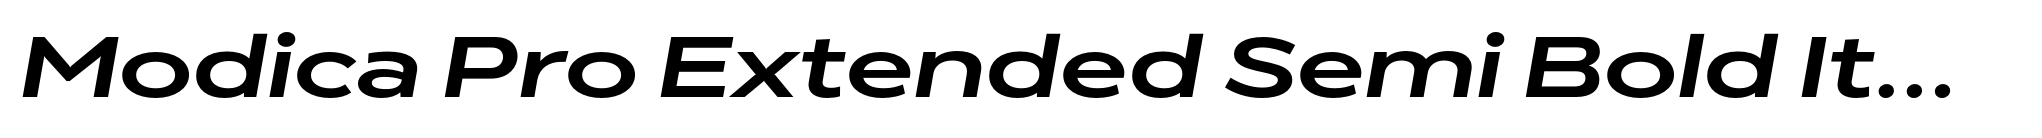 Modica Pro Extended Semi Bold Italic image